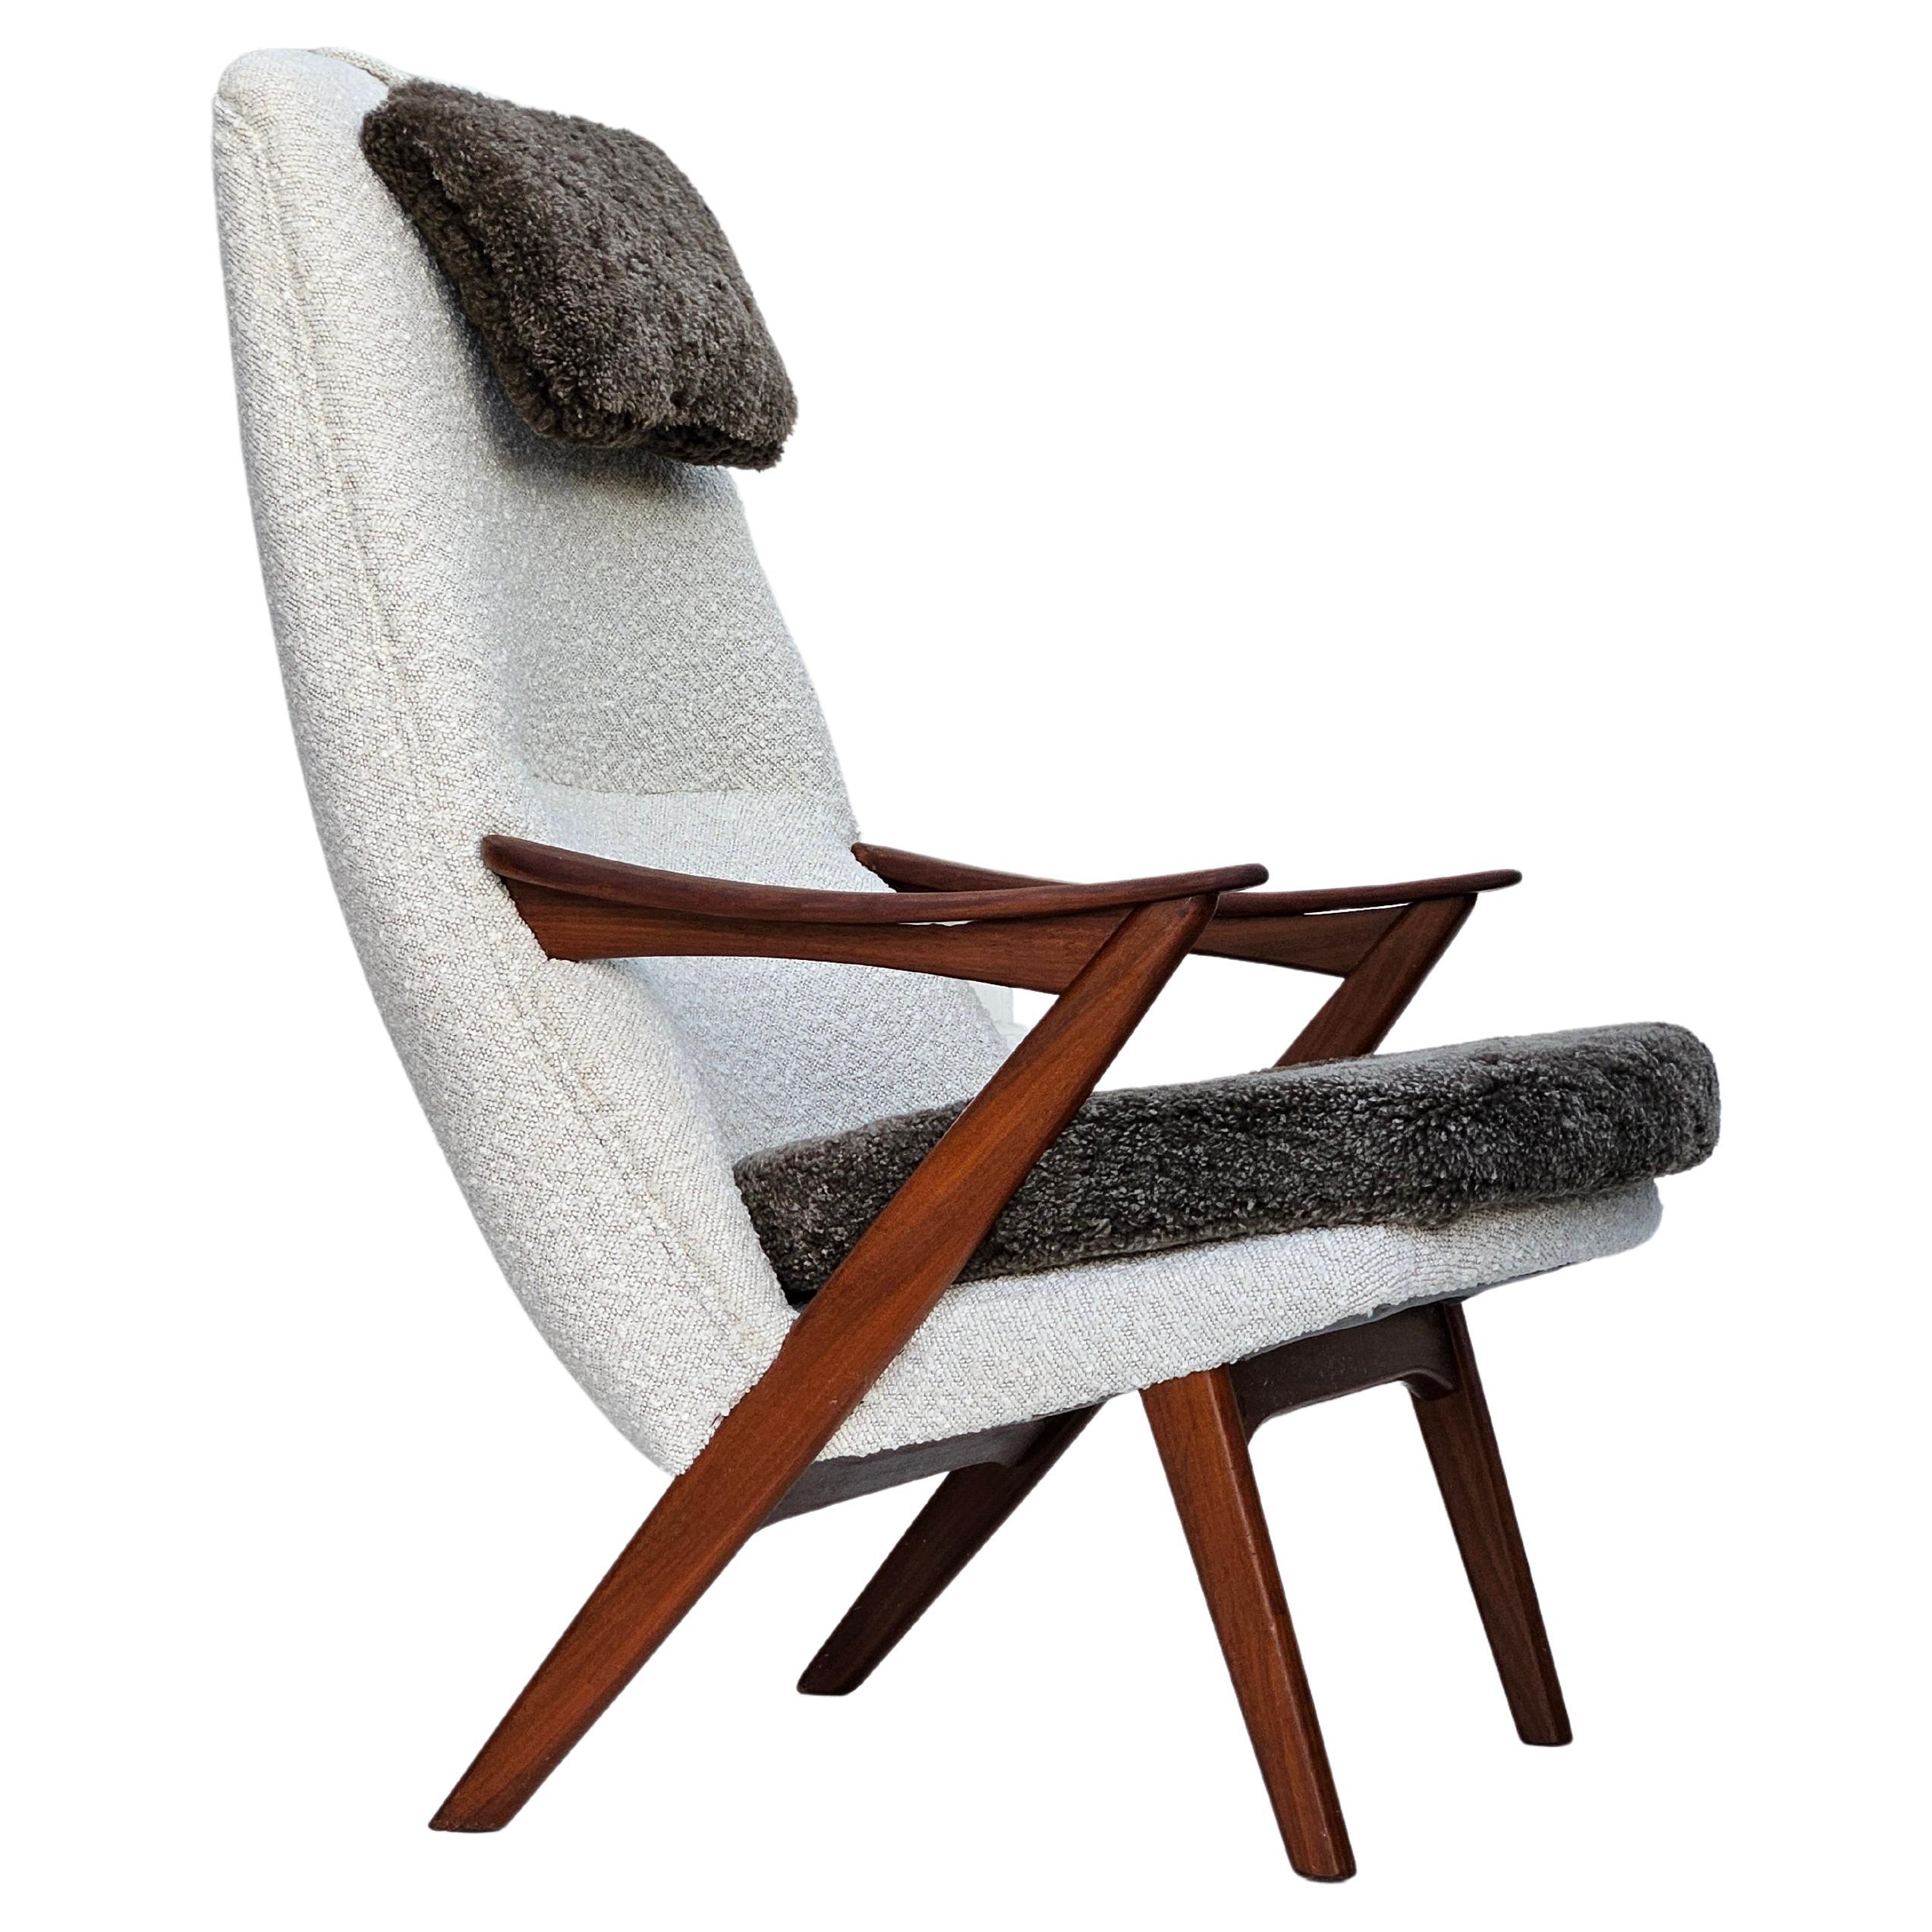 1960s, Scandinavian design, reupholstered armchair, furniture fabric, sheepskin. For Sale